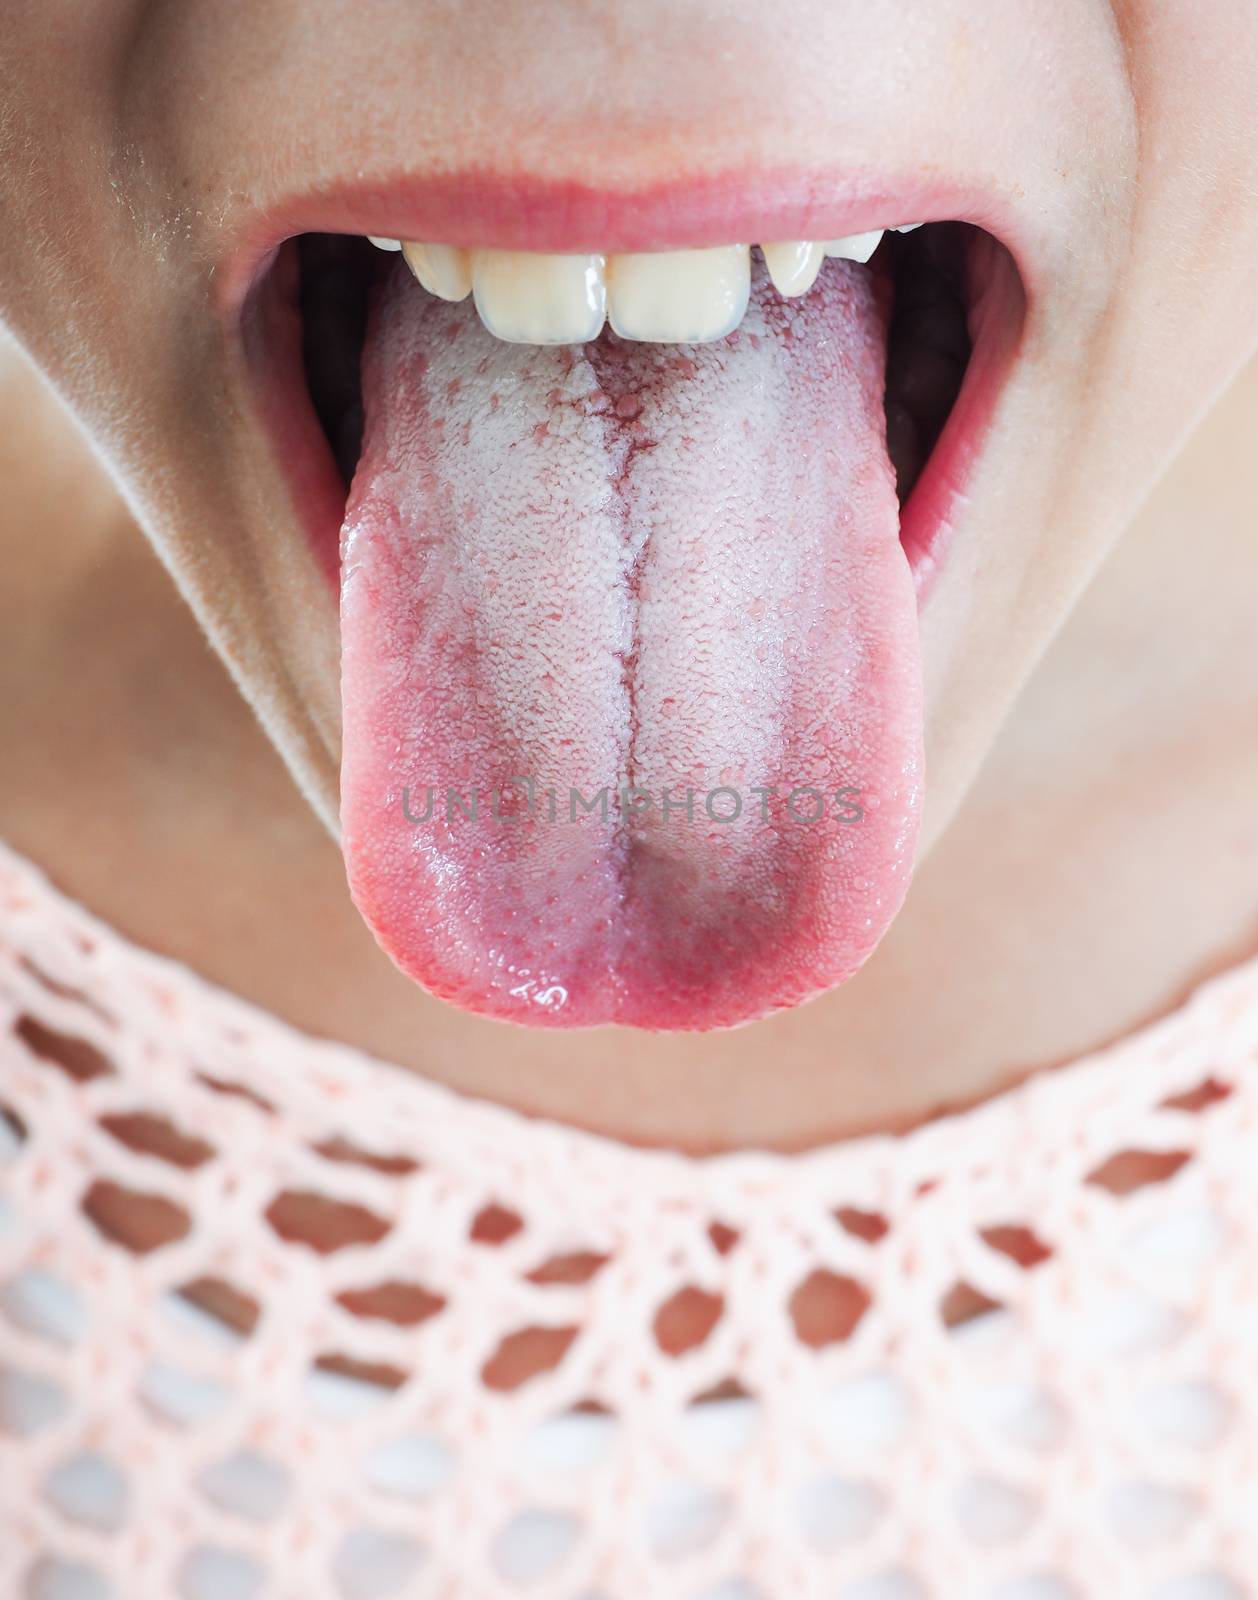 Protruding white tongue by Arvebettum